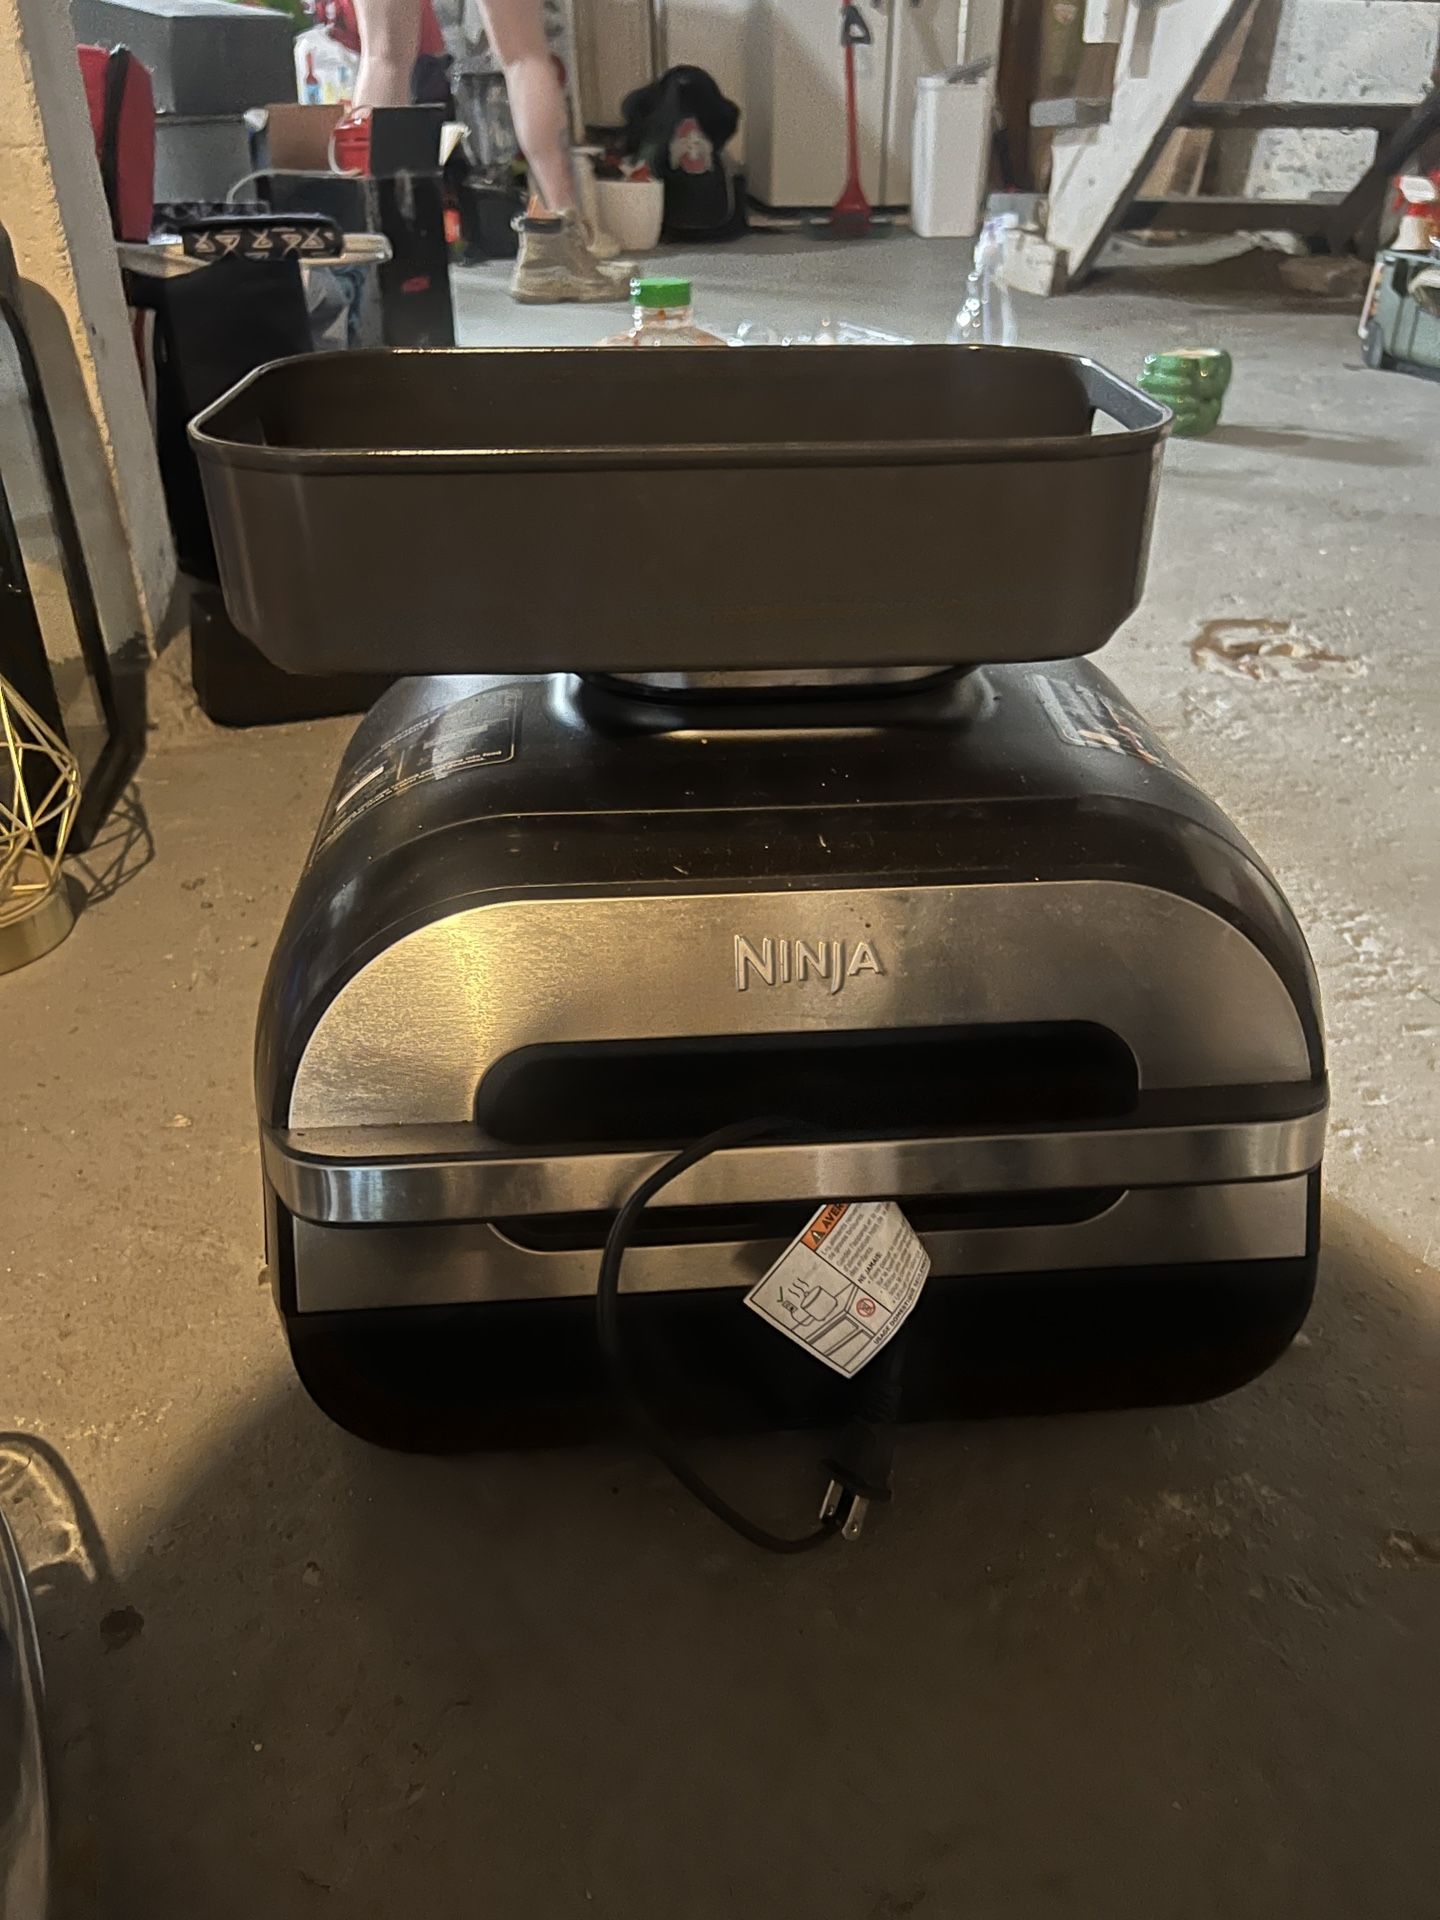 Ninja grill